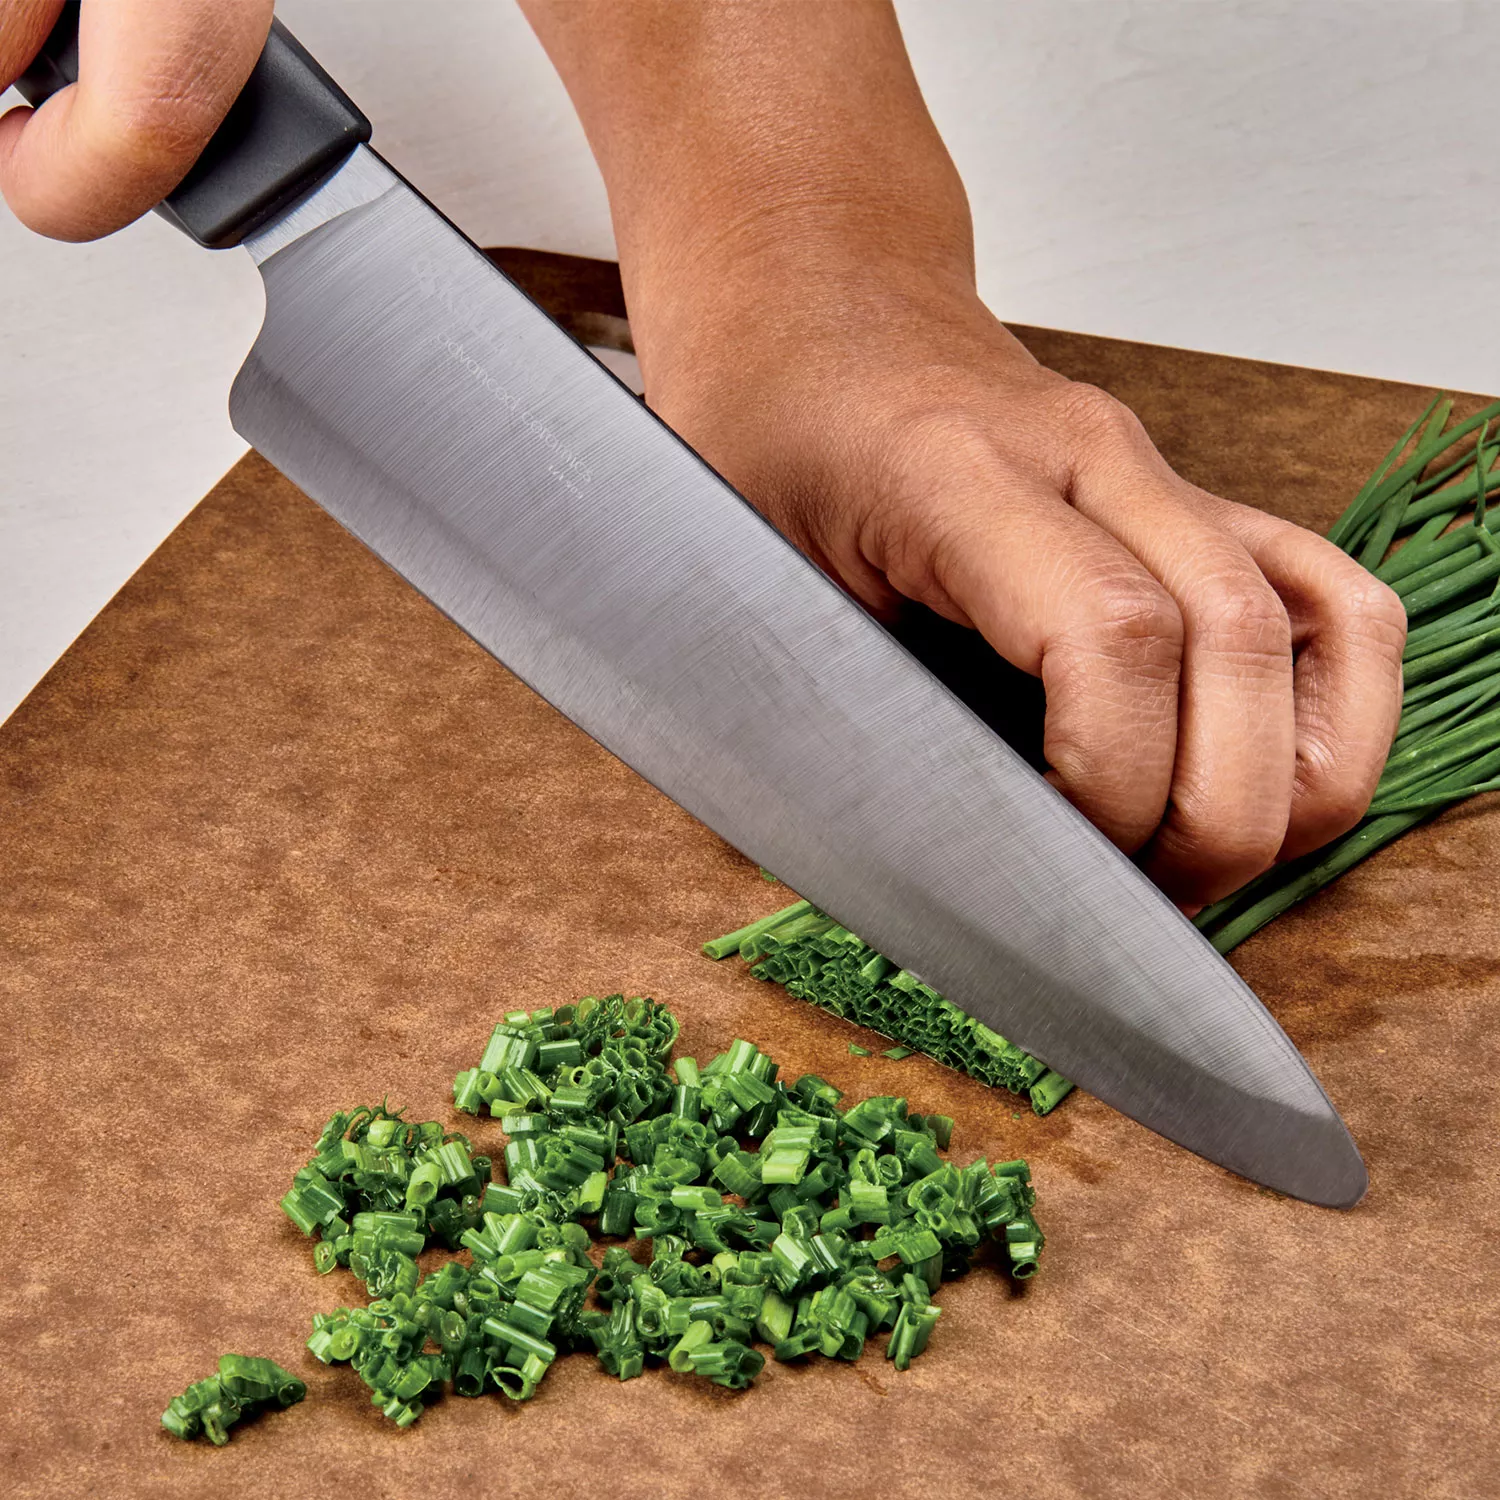 KYOCERA > Kyocera's professional size ultra-sharp lightweight ergonomic  ceramic chefs knife